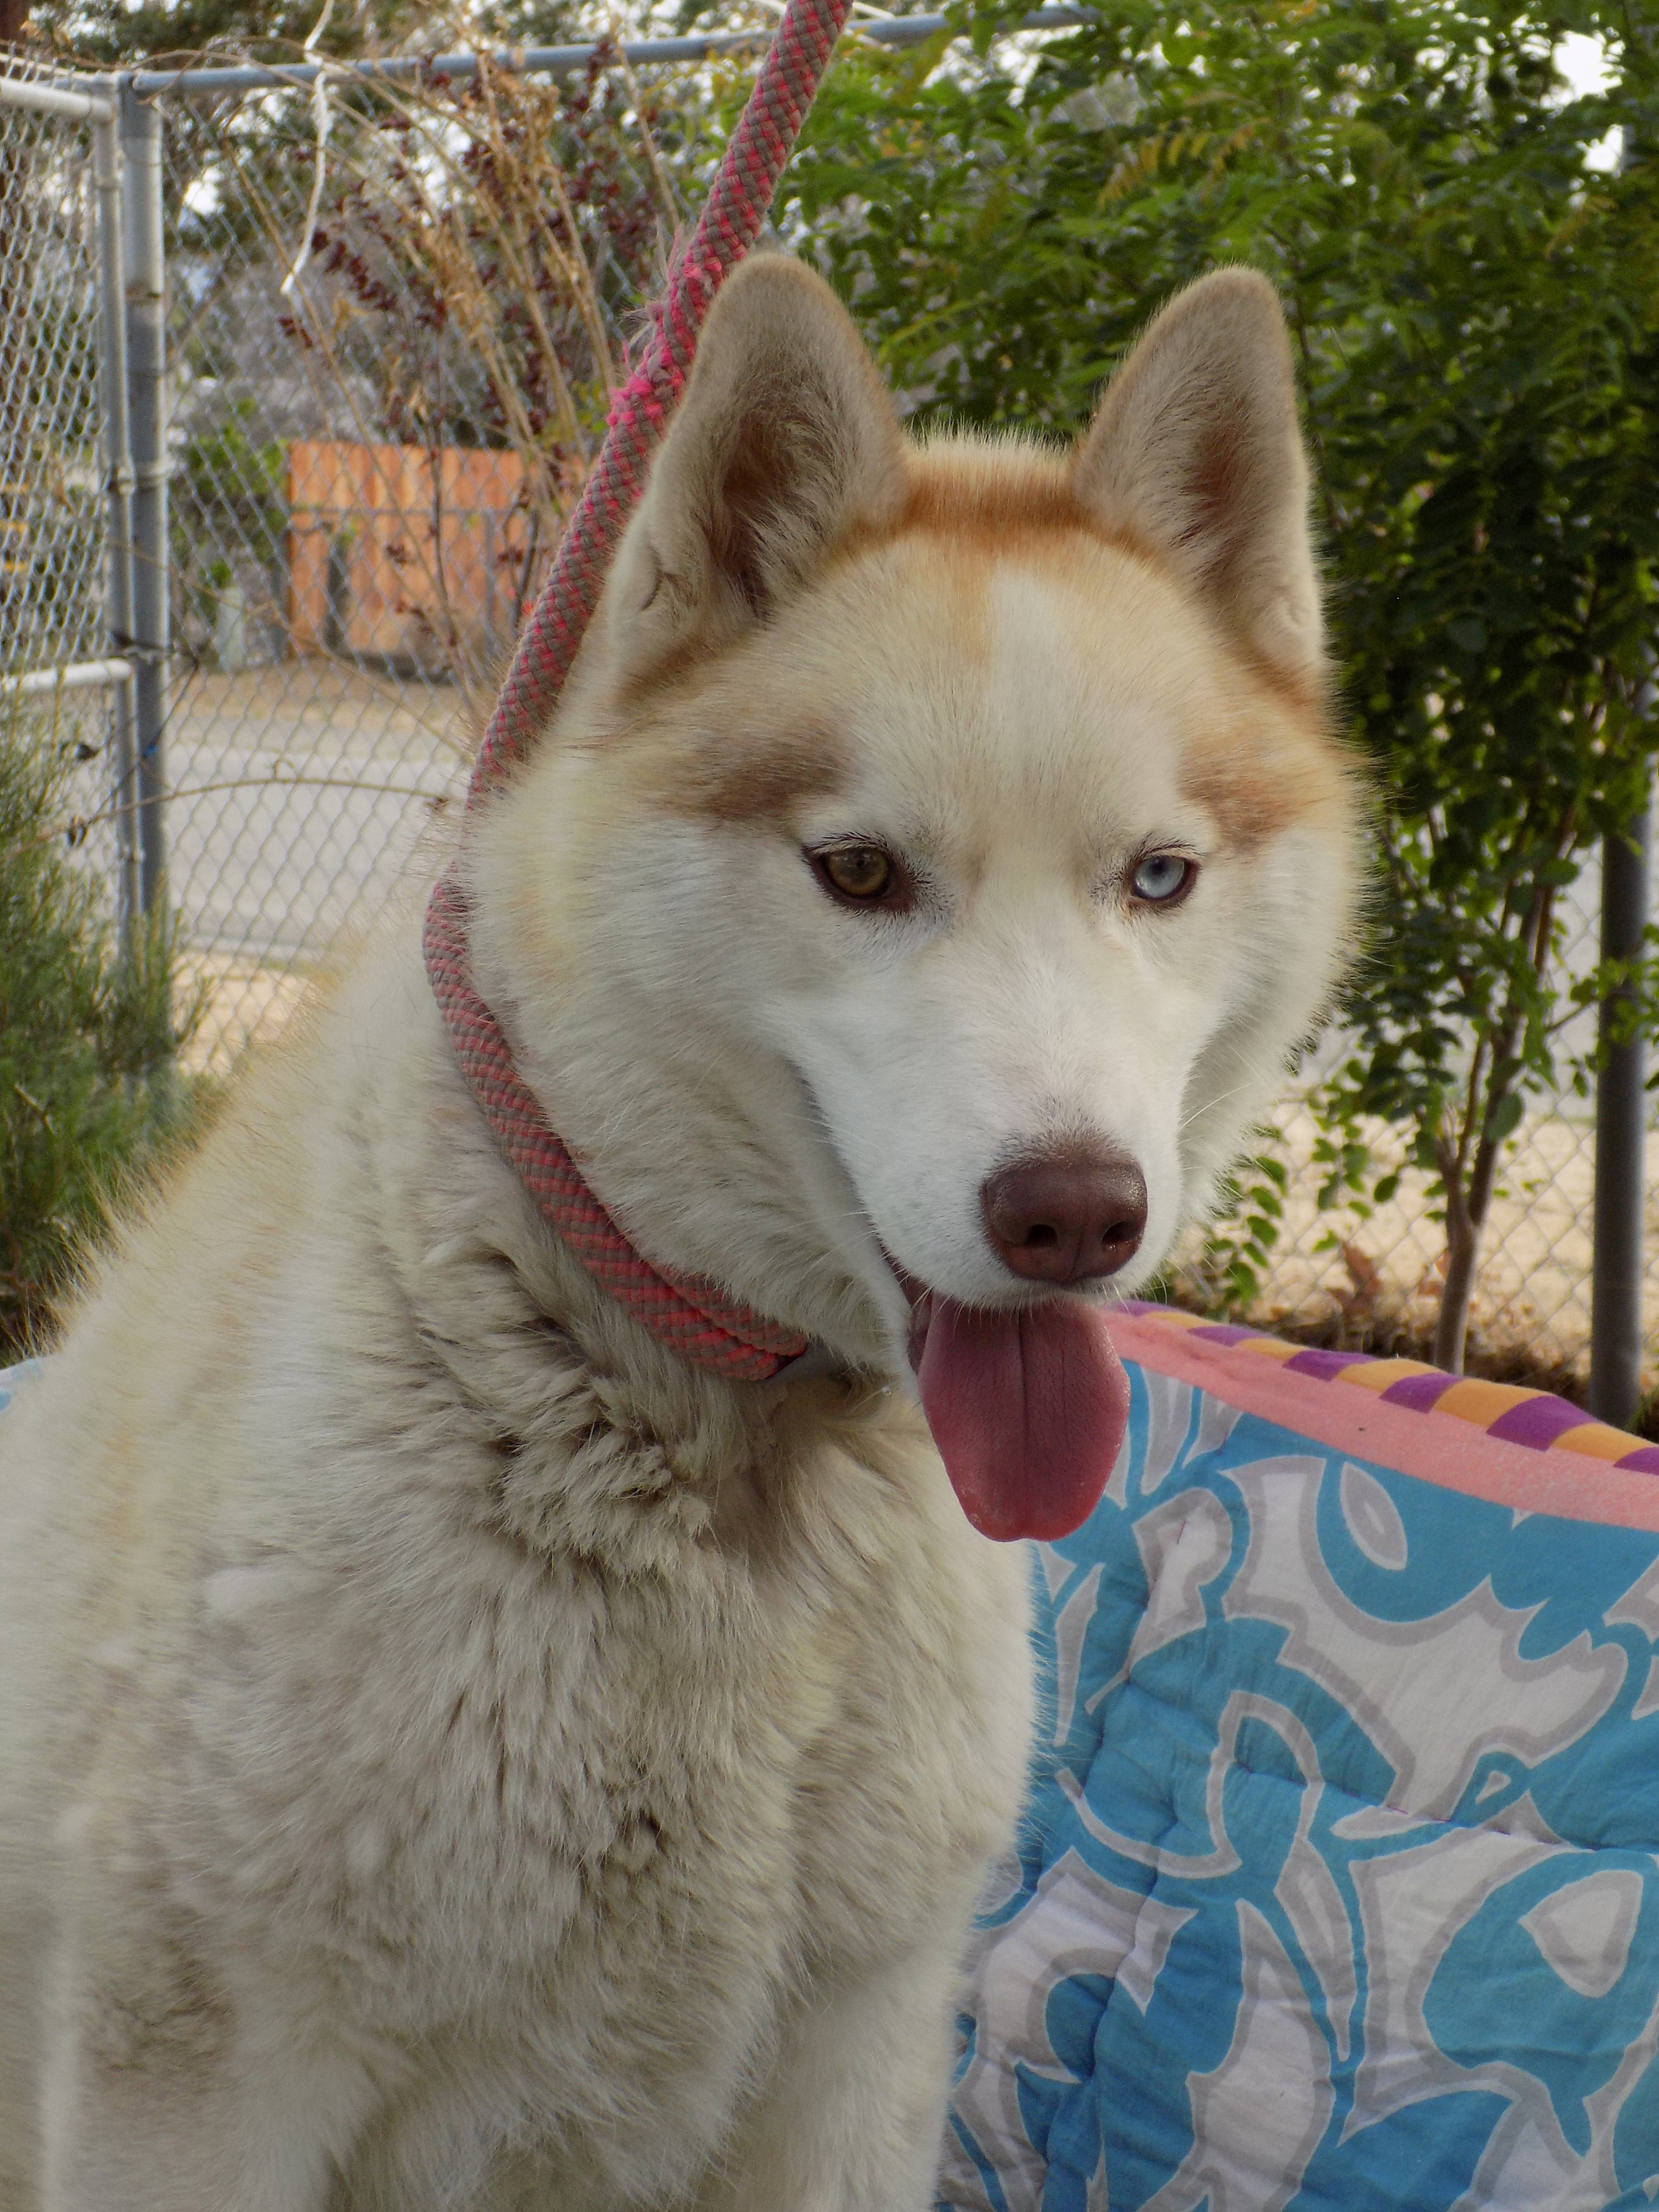 CINNAMON, an adoptable Siberian Husky in Valencia, CA, 91355 | Photo Image 1